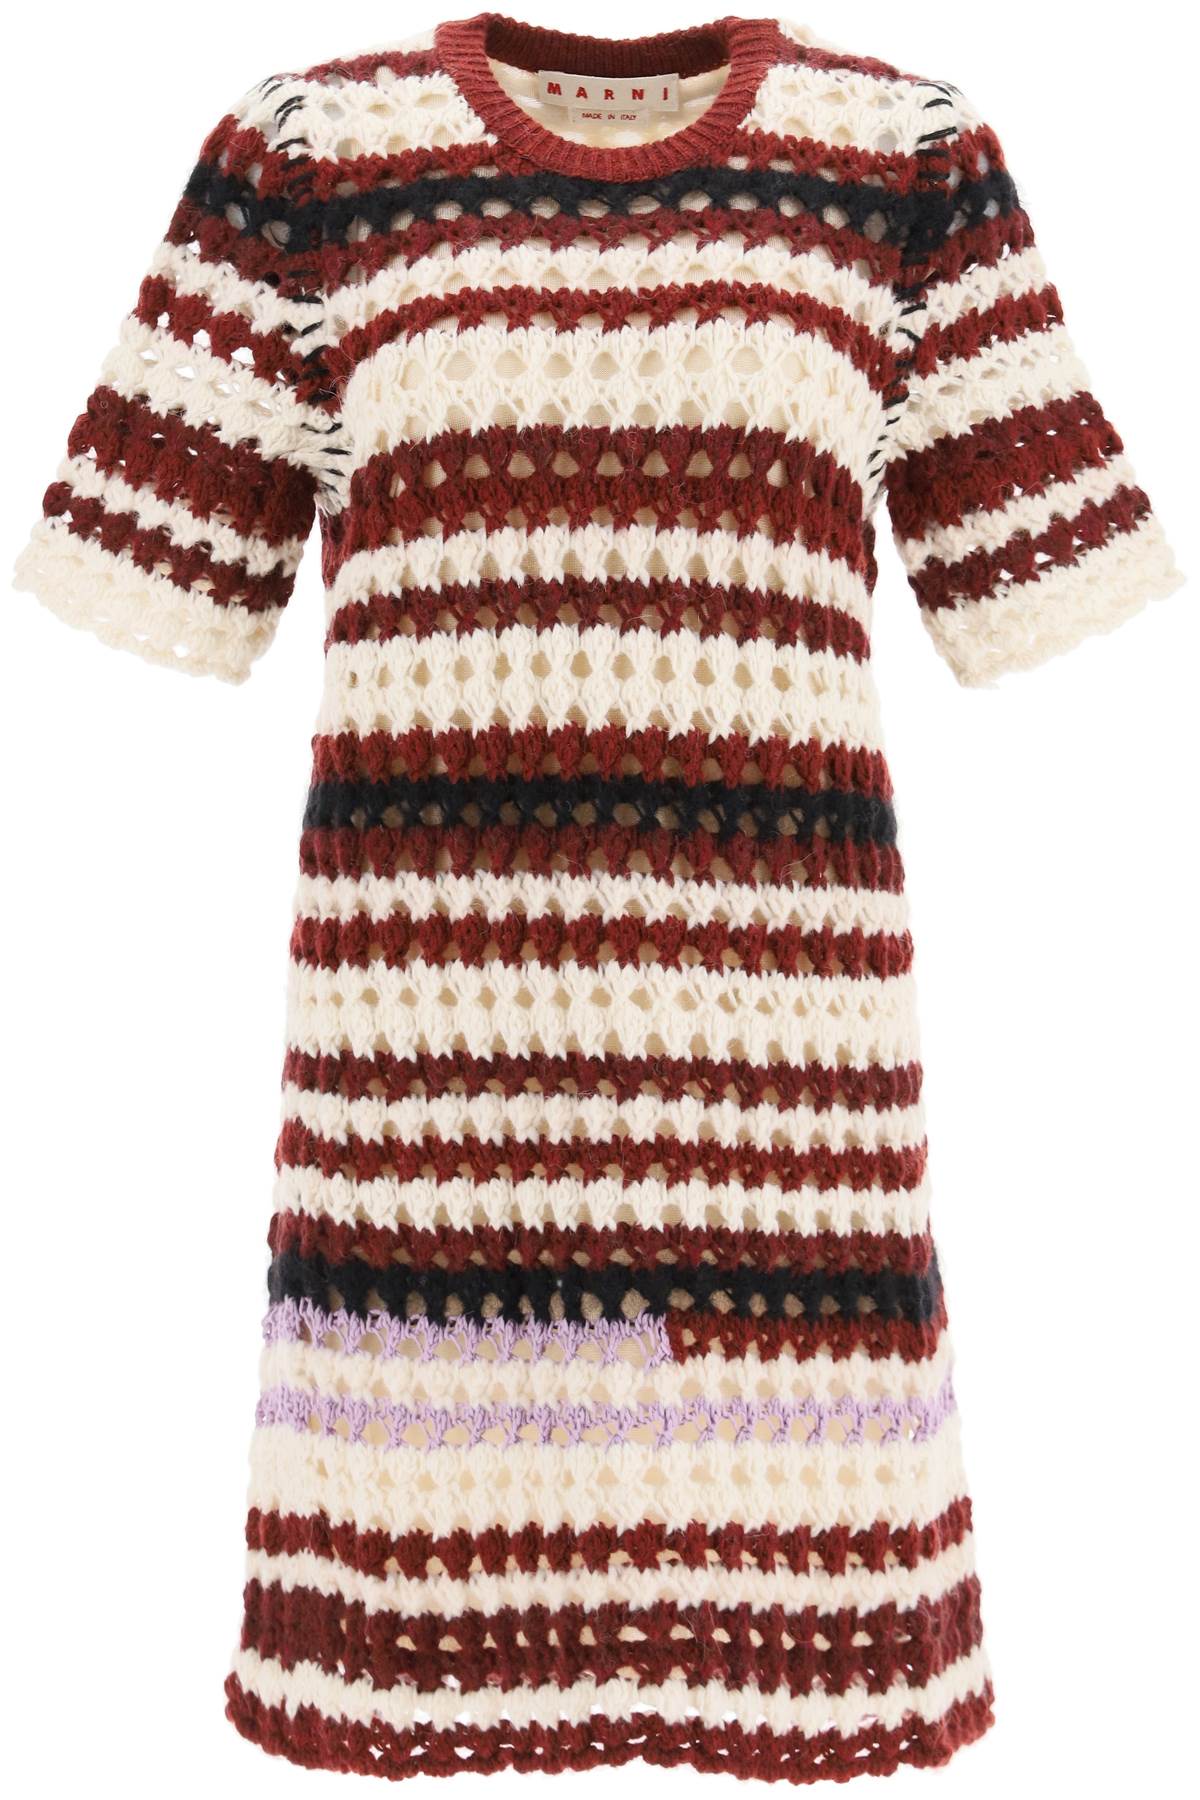 Marni Striped Crochet Dress